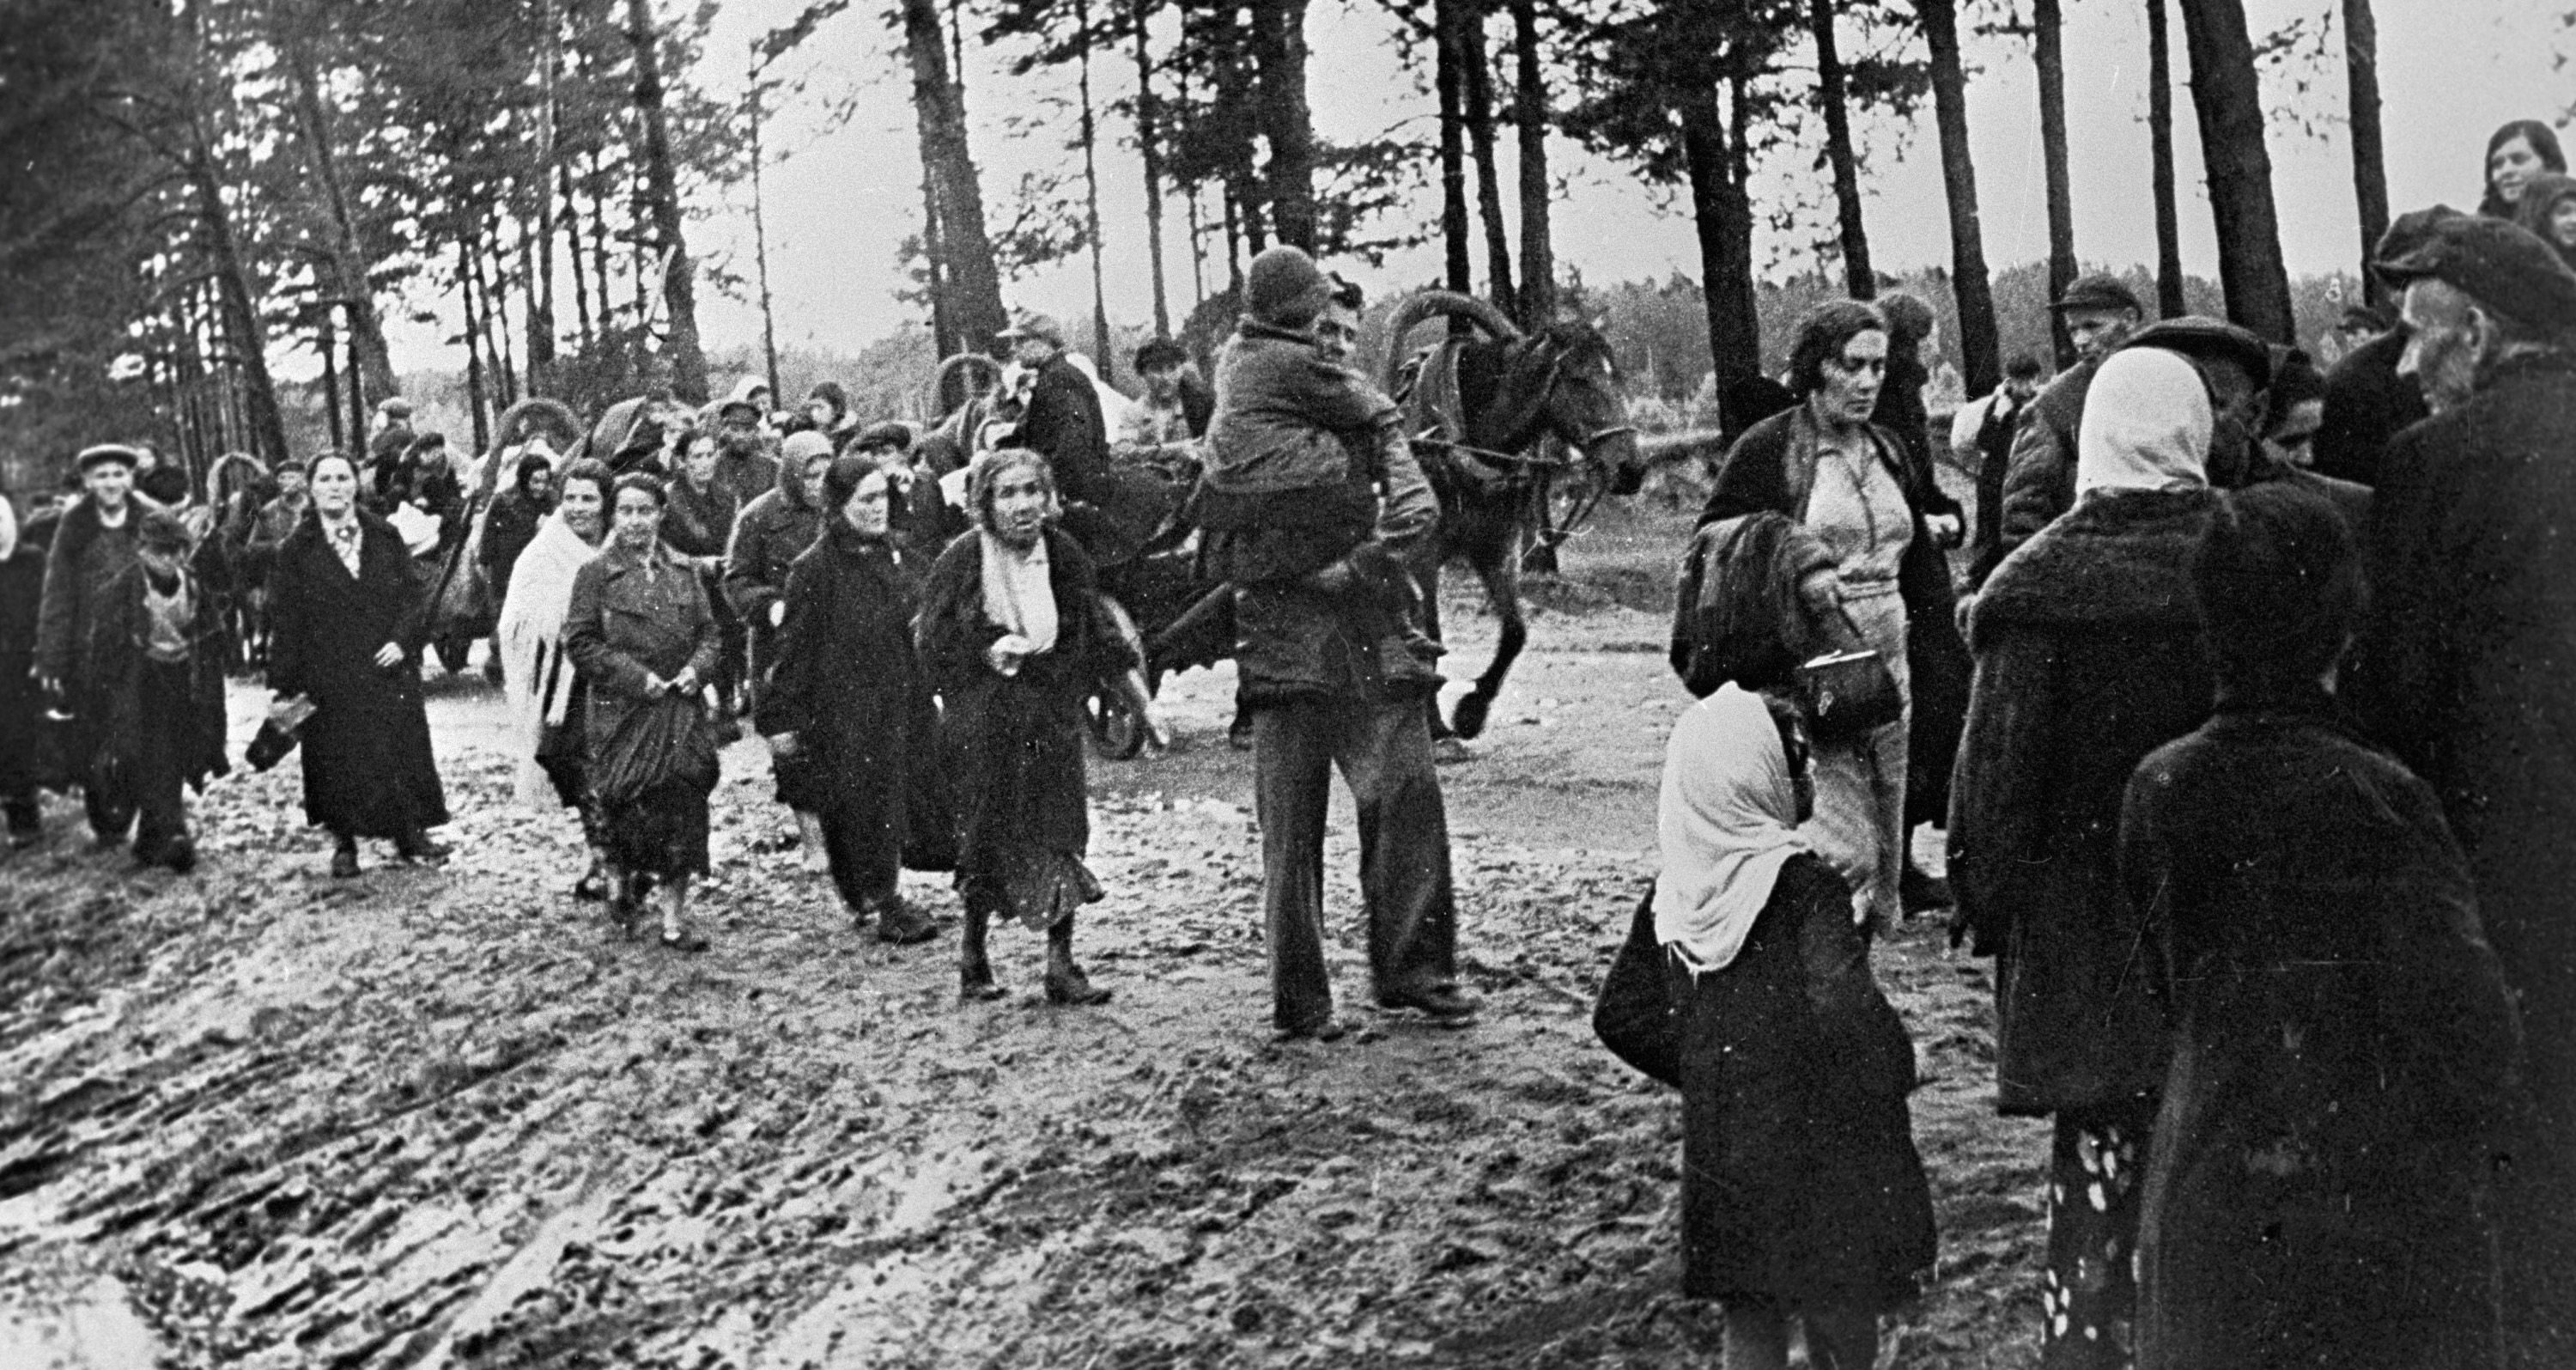 История 1941 года начало войны. Начало войны 1941 года. Первый день войны 22 июня 1941 года. Жертвы беженцы 1941 лето 1941.